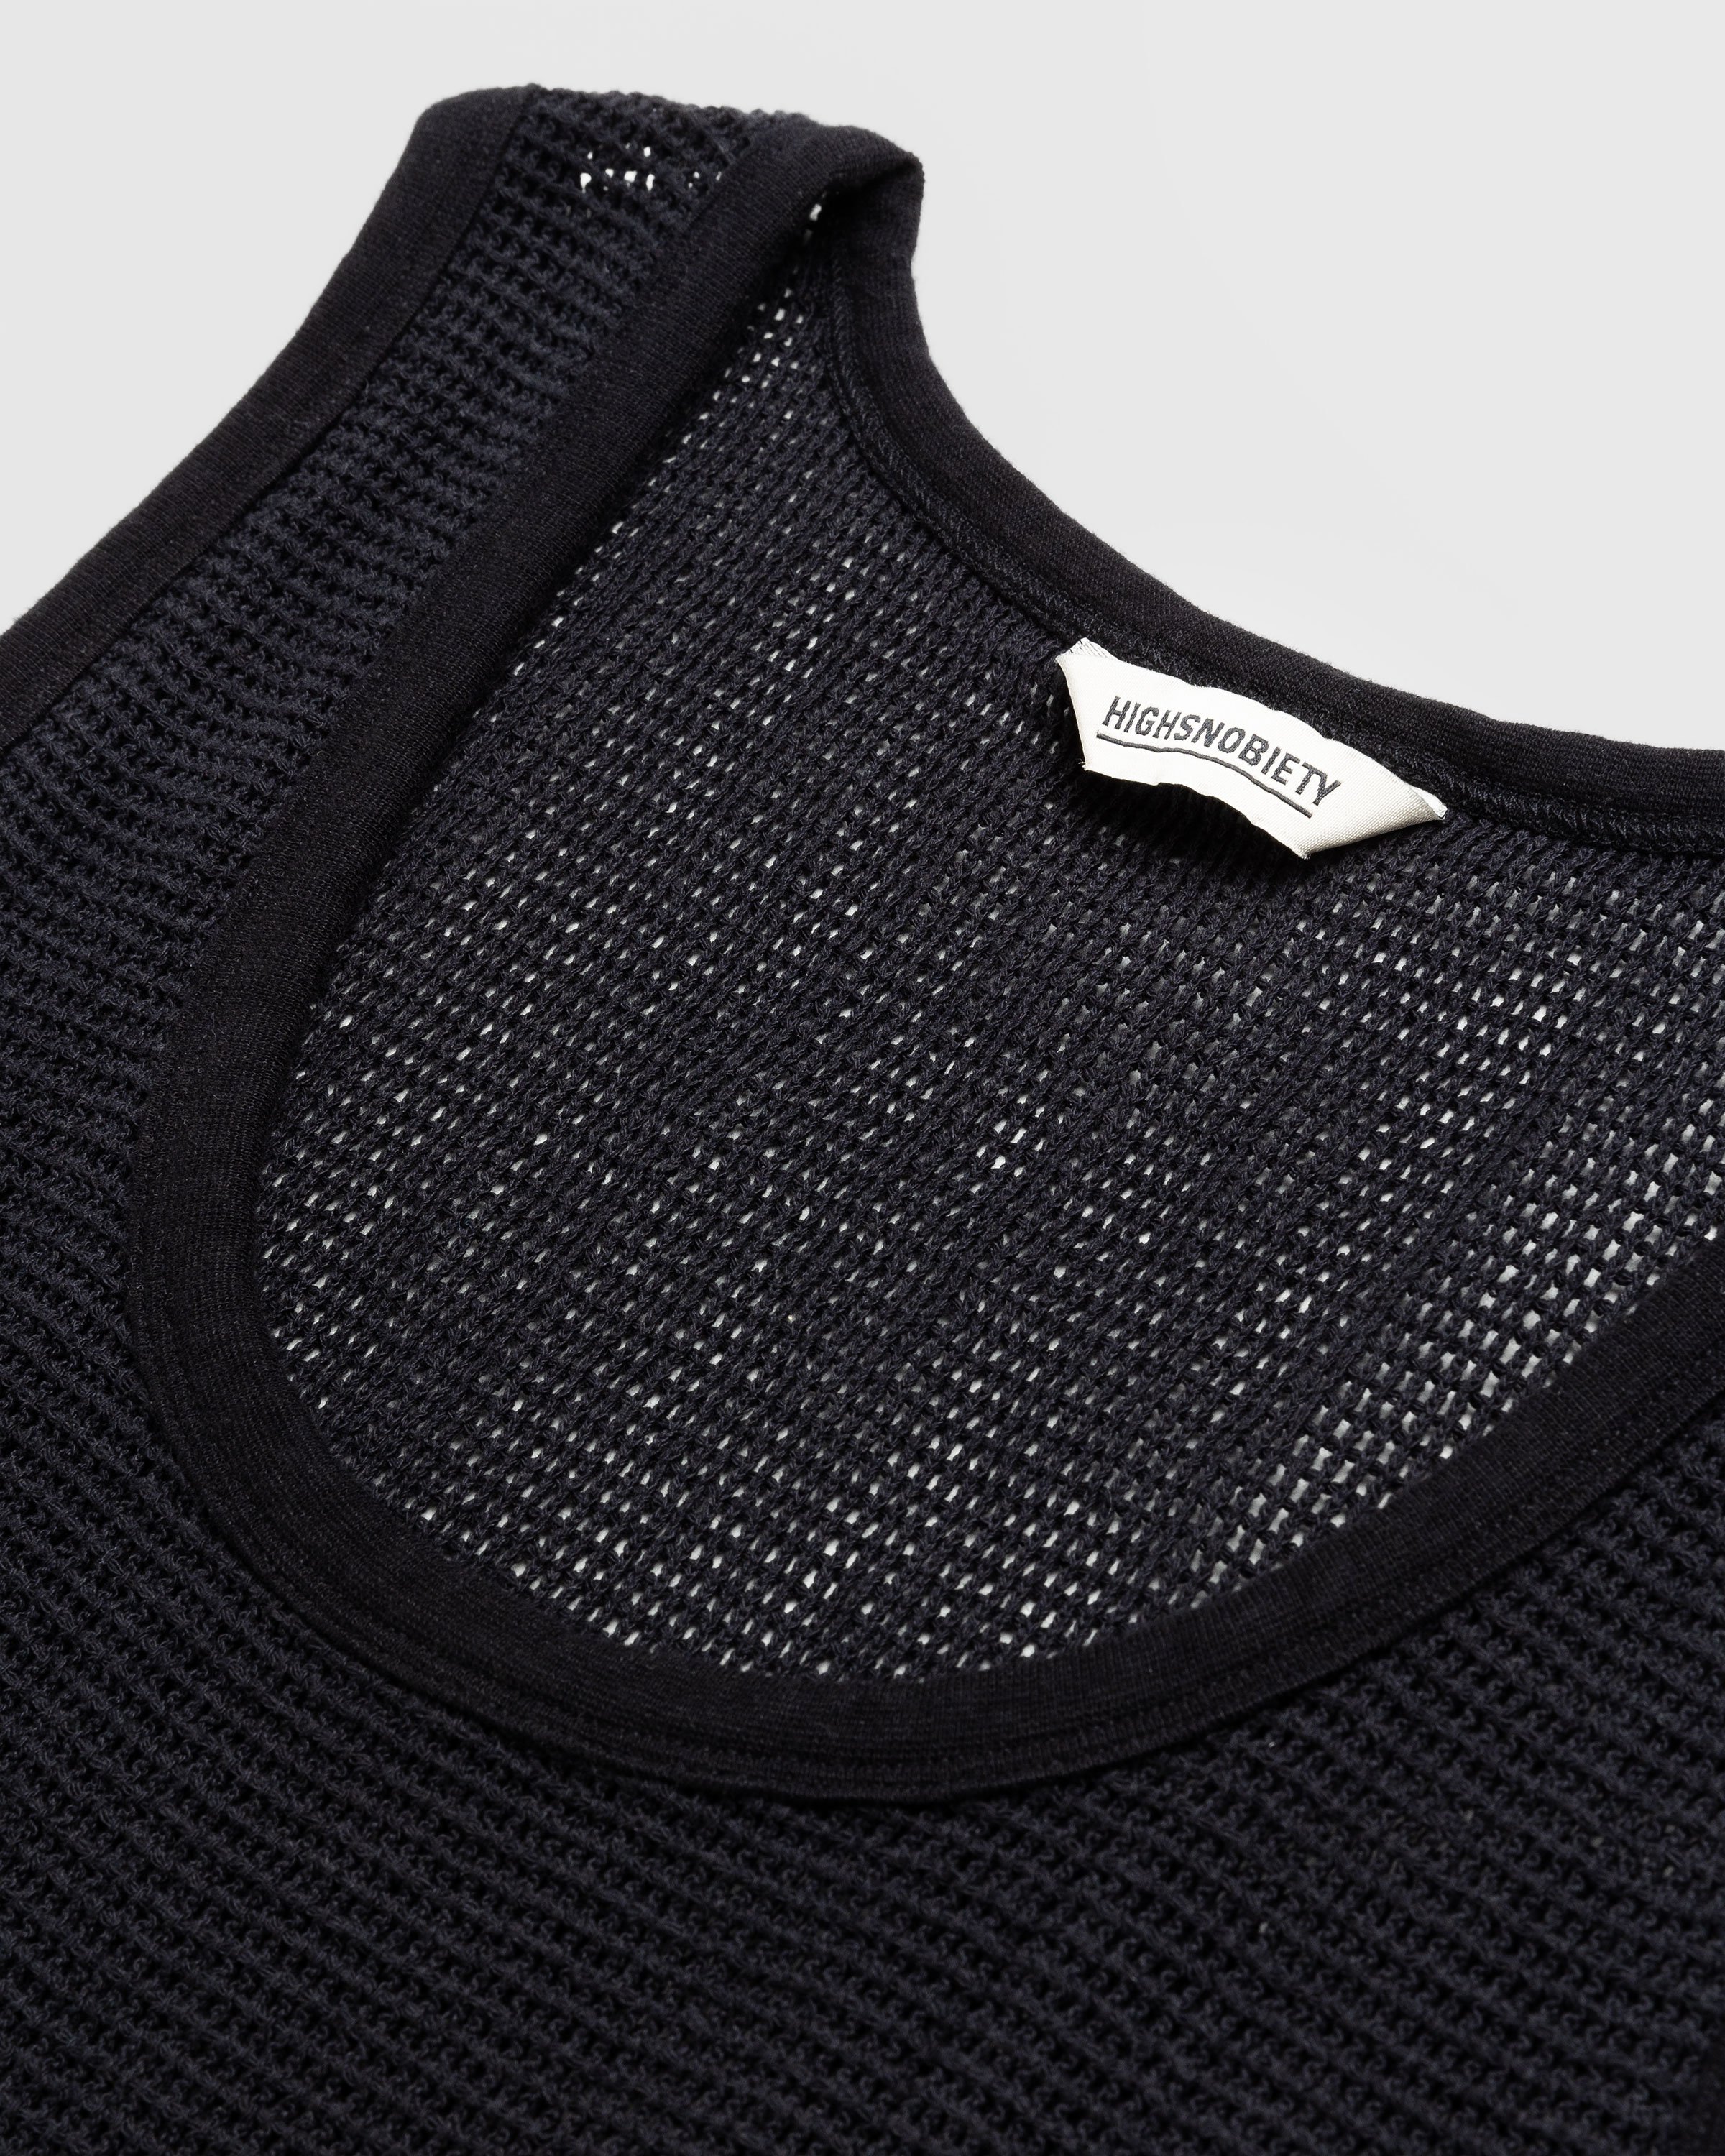 Highsnobiety - Cotton Mesh Knit Tank Top Black - Clothing - Black - Image 6